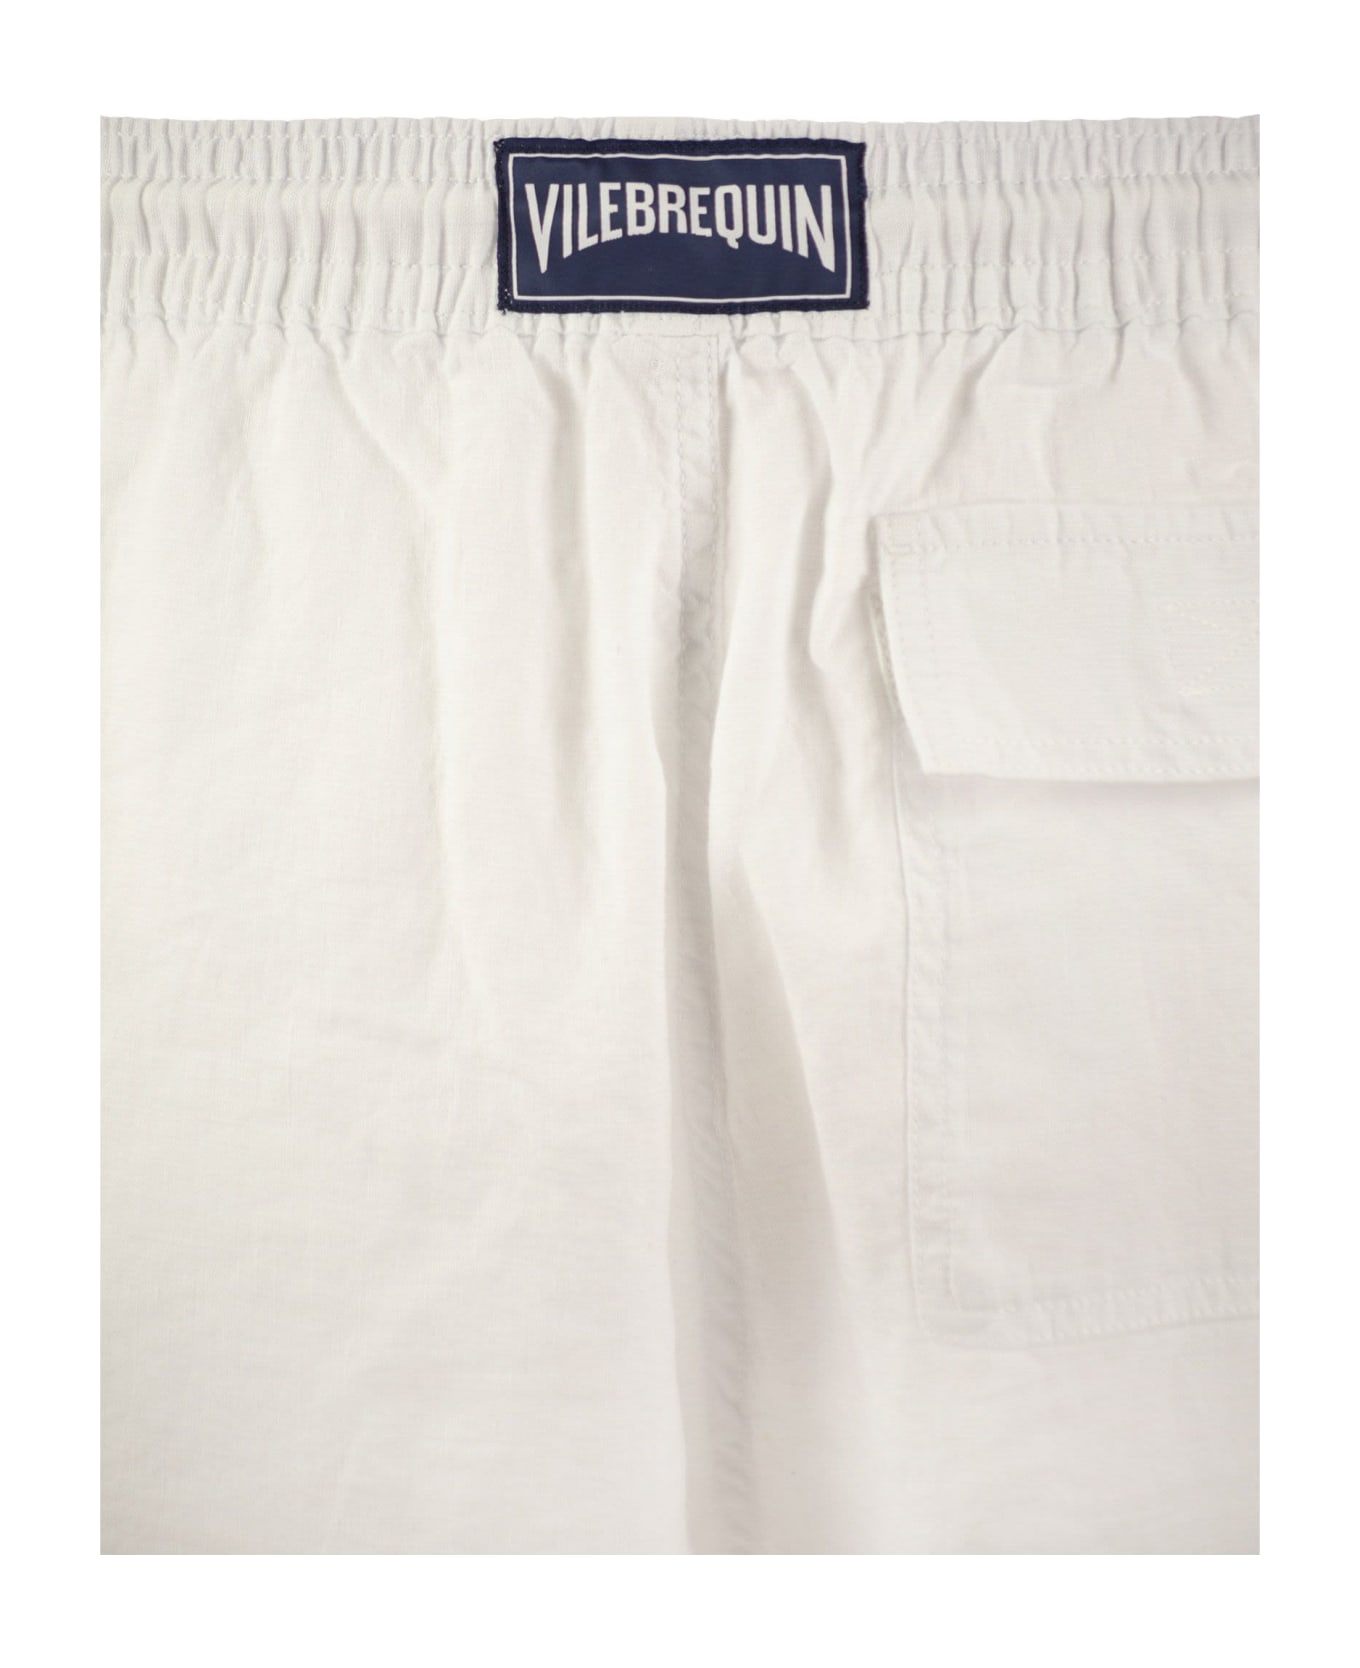 Vilebrequin Linen Cargo Bermuda Shorts - White ショートパンツ